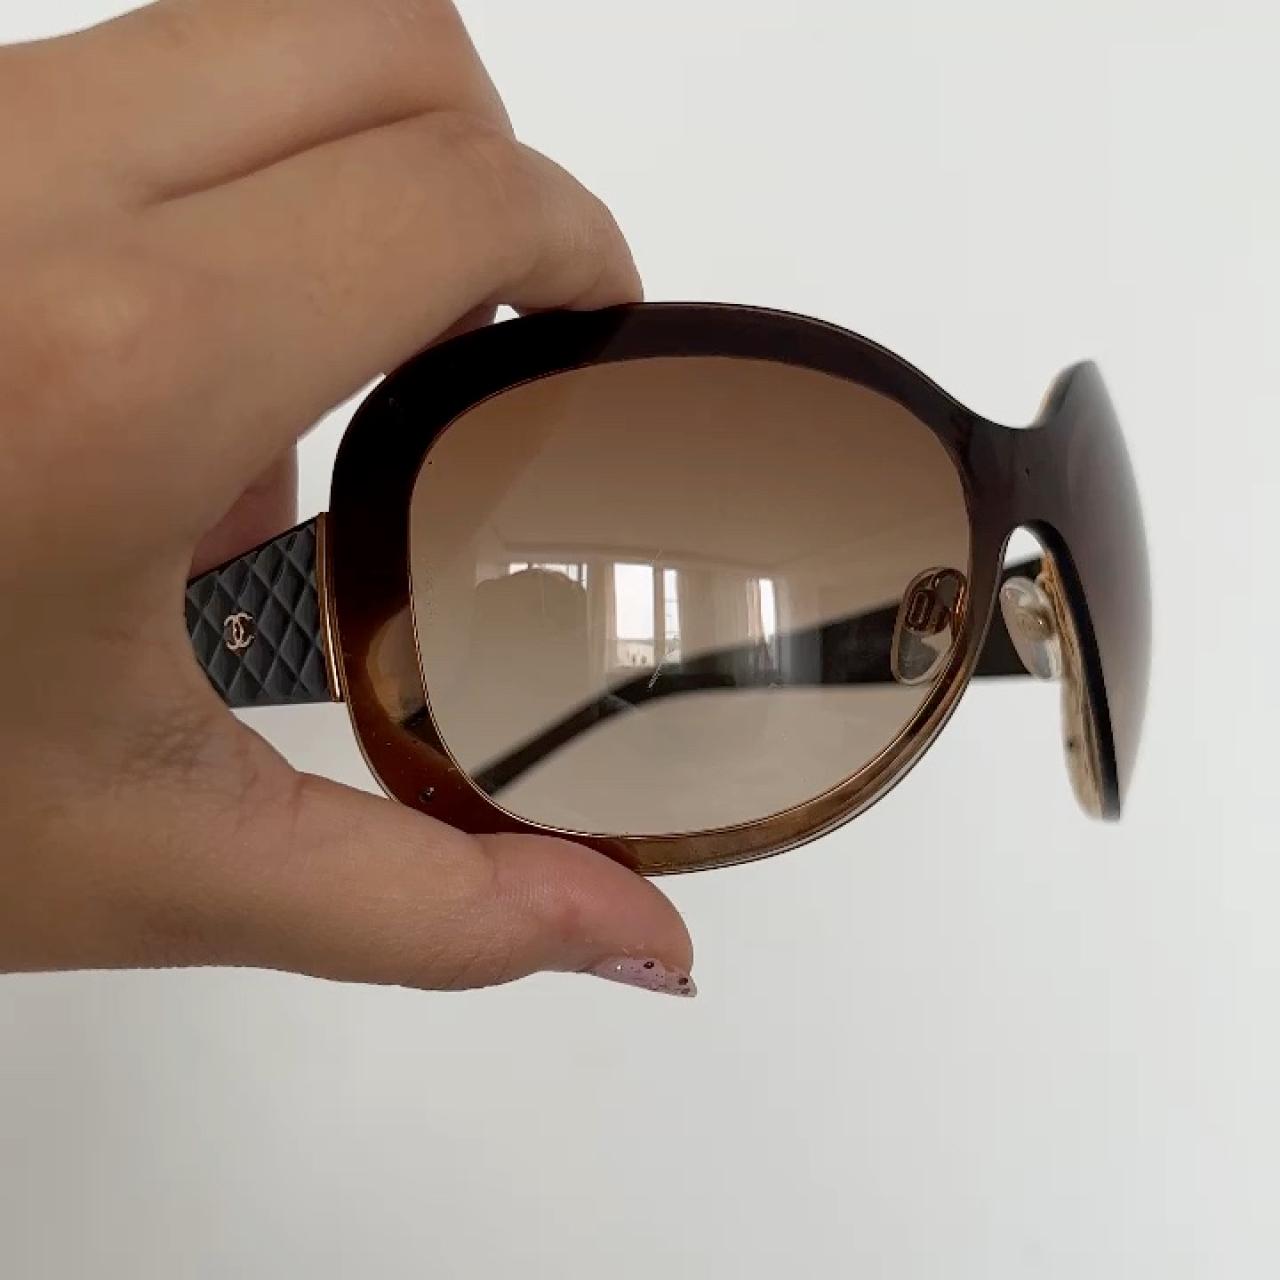 Original vintage chanel sunglasses 8/10 condition - Depop